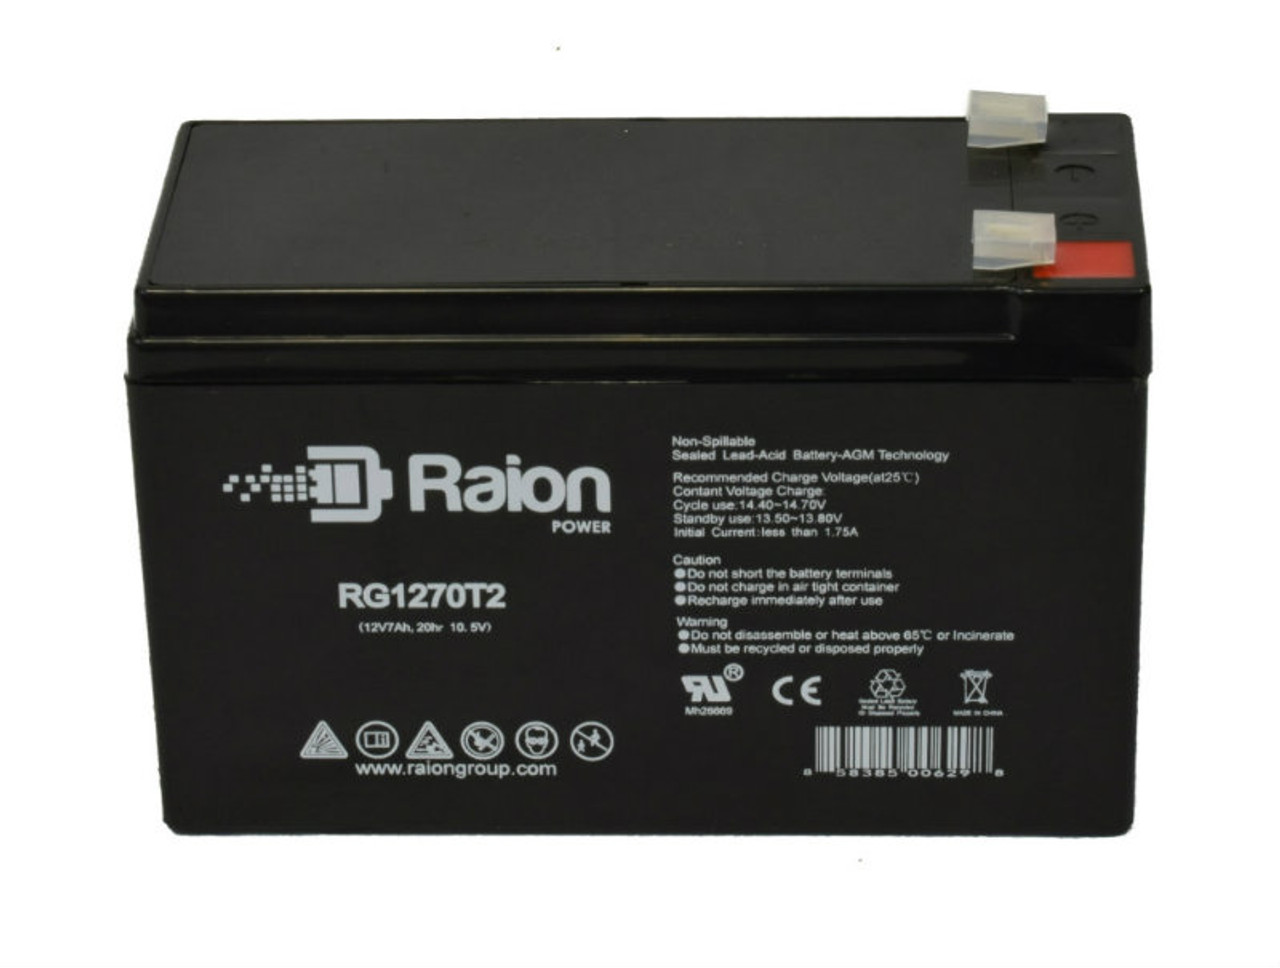 Raion Power RG1270T1 12V 7Ah Lead Acid Battery for ACME Security System 624